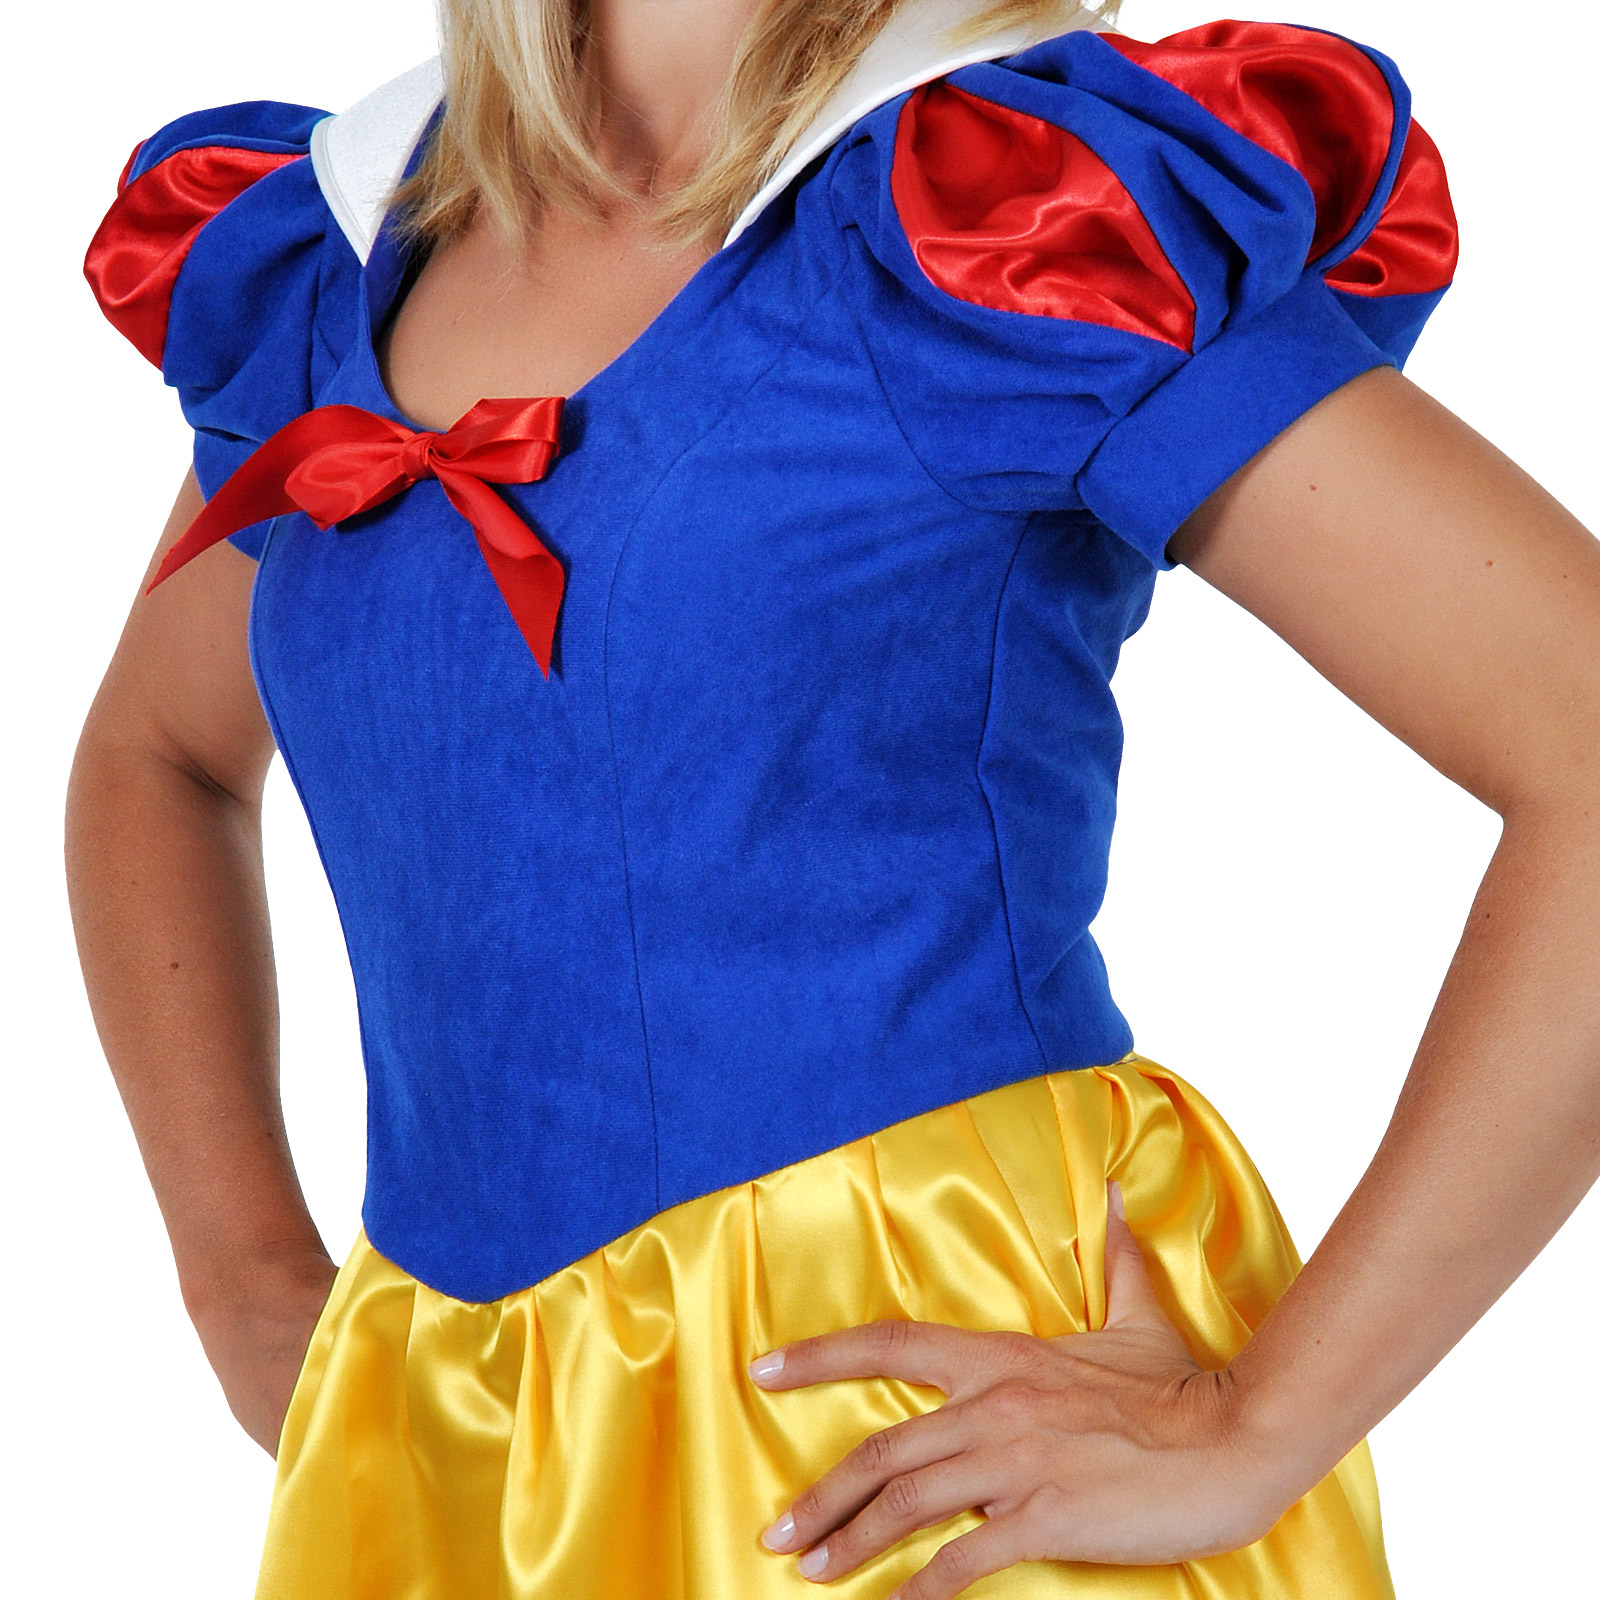 Snow White Fairy Tale Costume